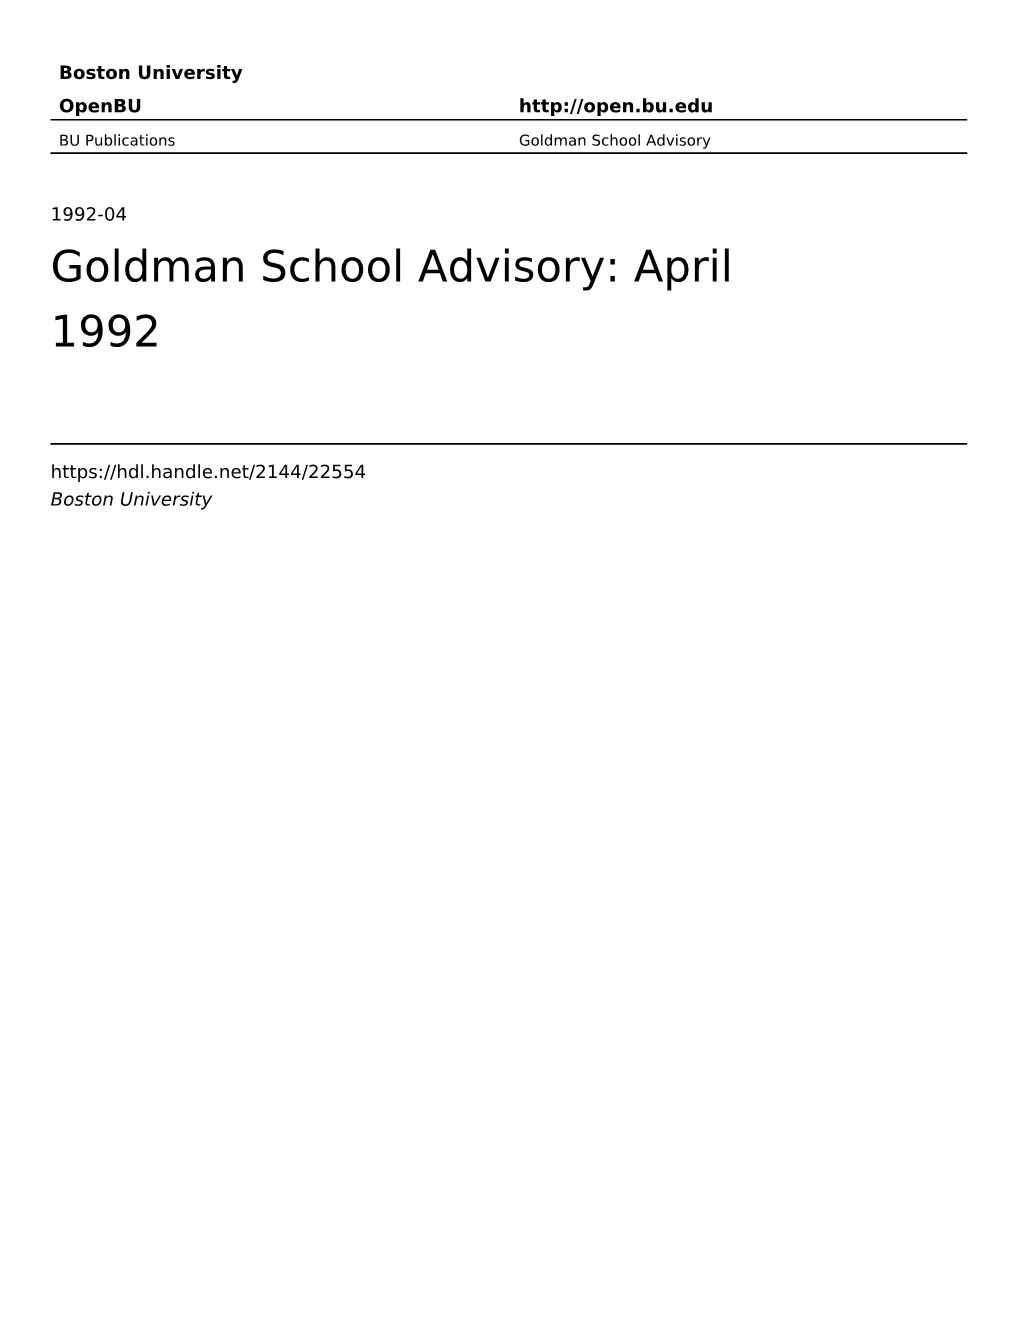 Goldman School Advisory: April 1992